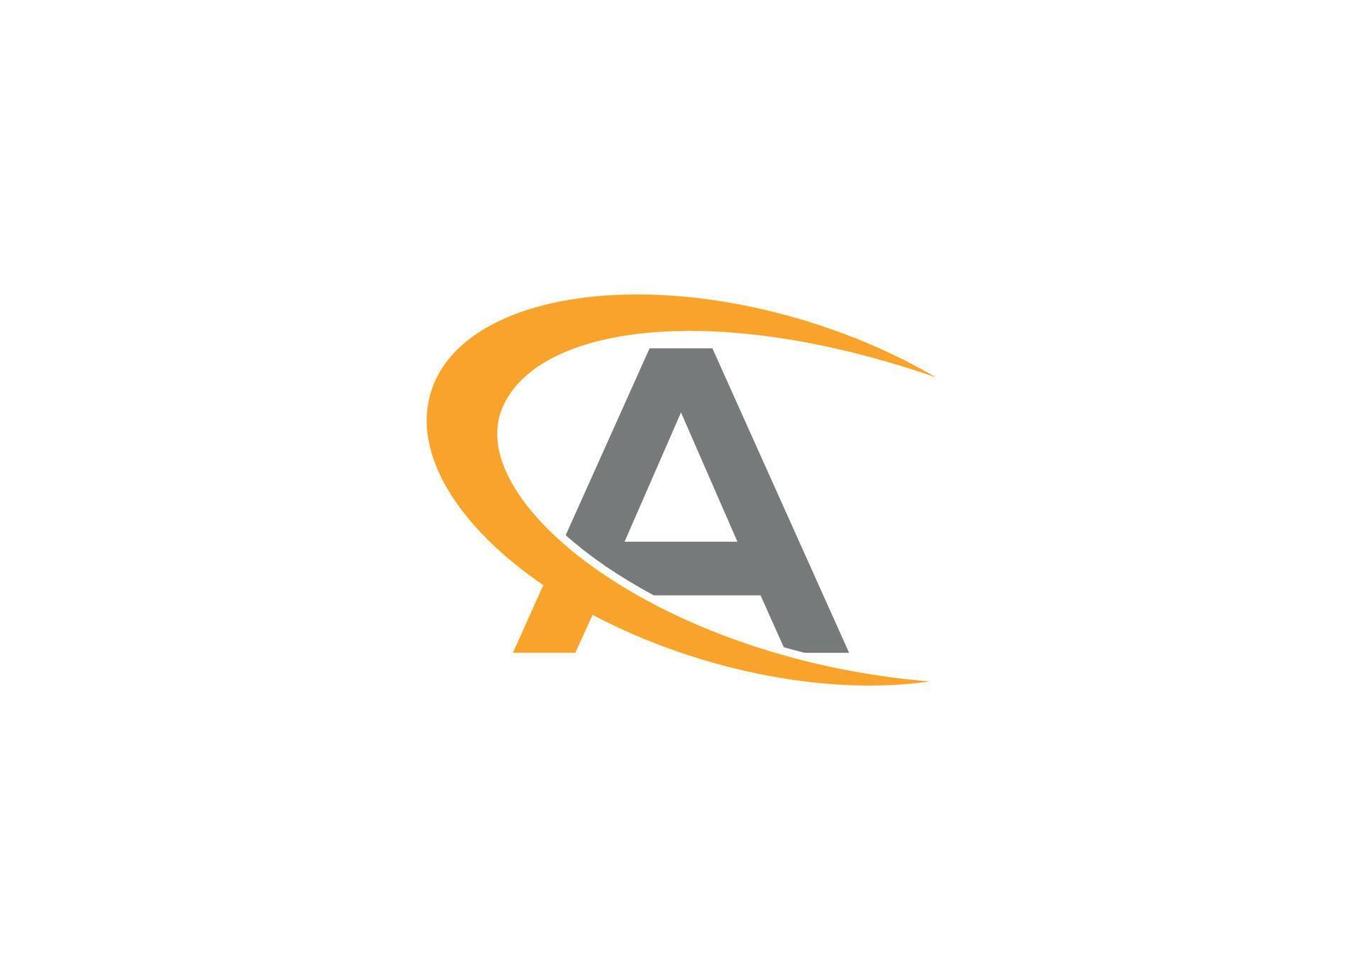 ac initial modern logo design vector icon template